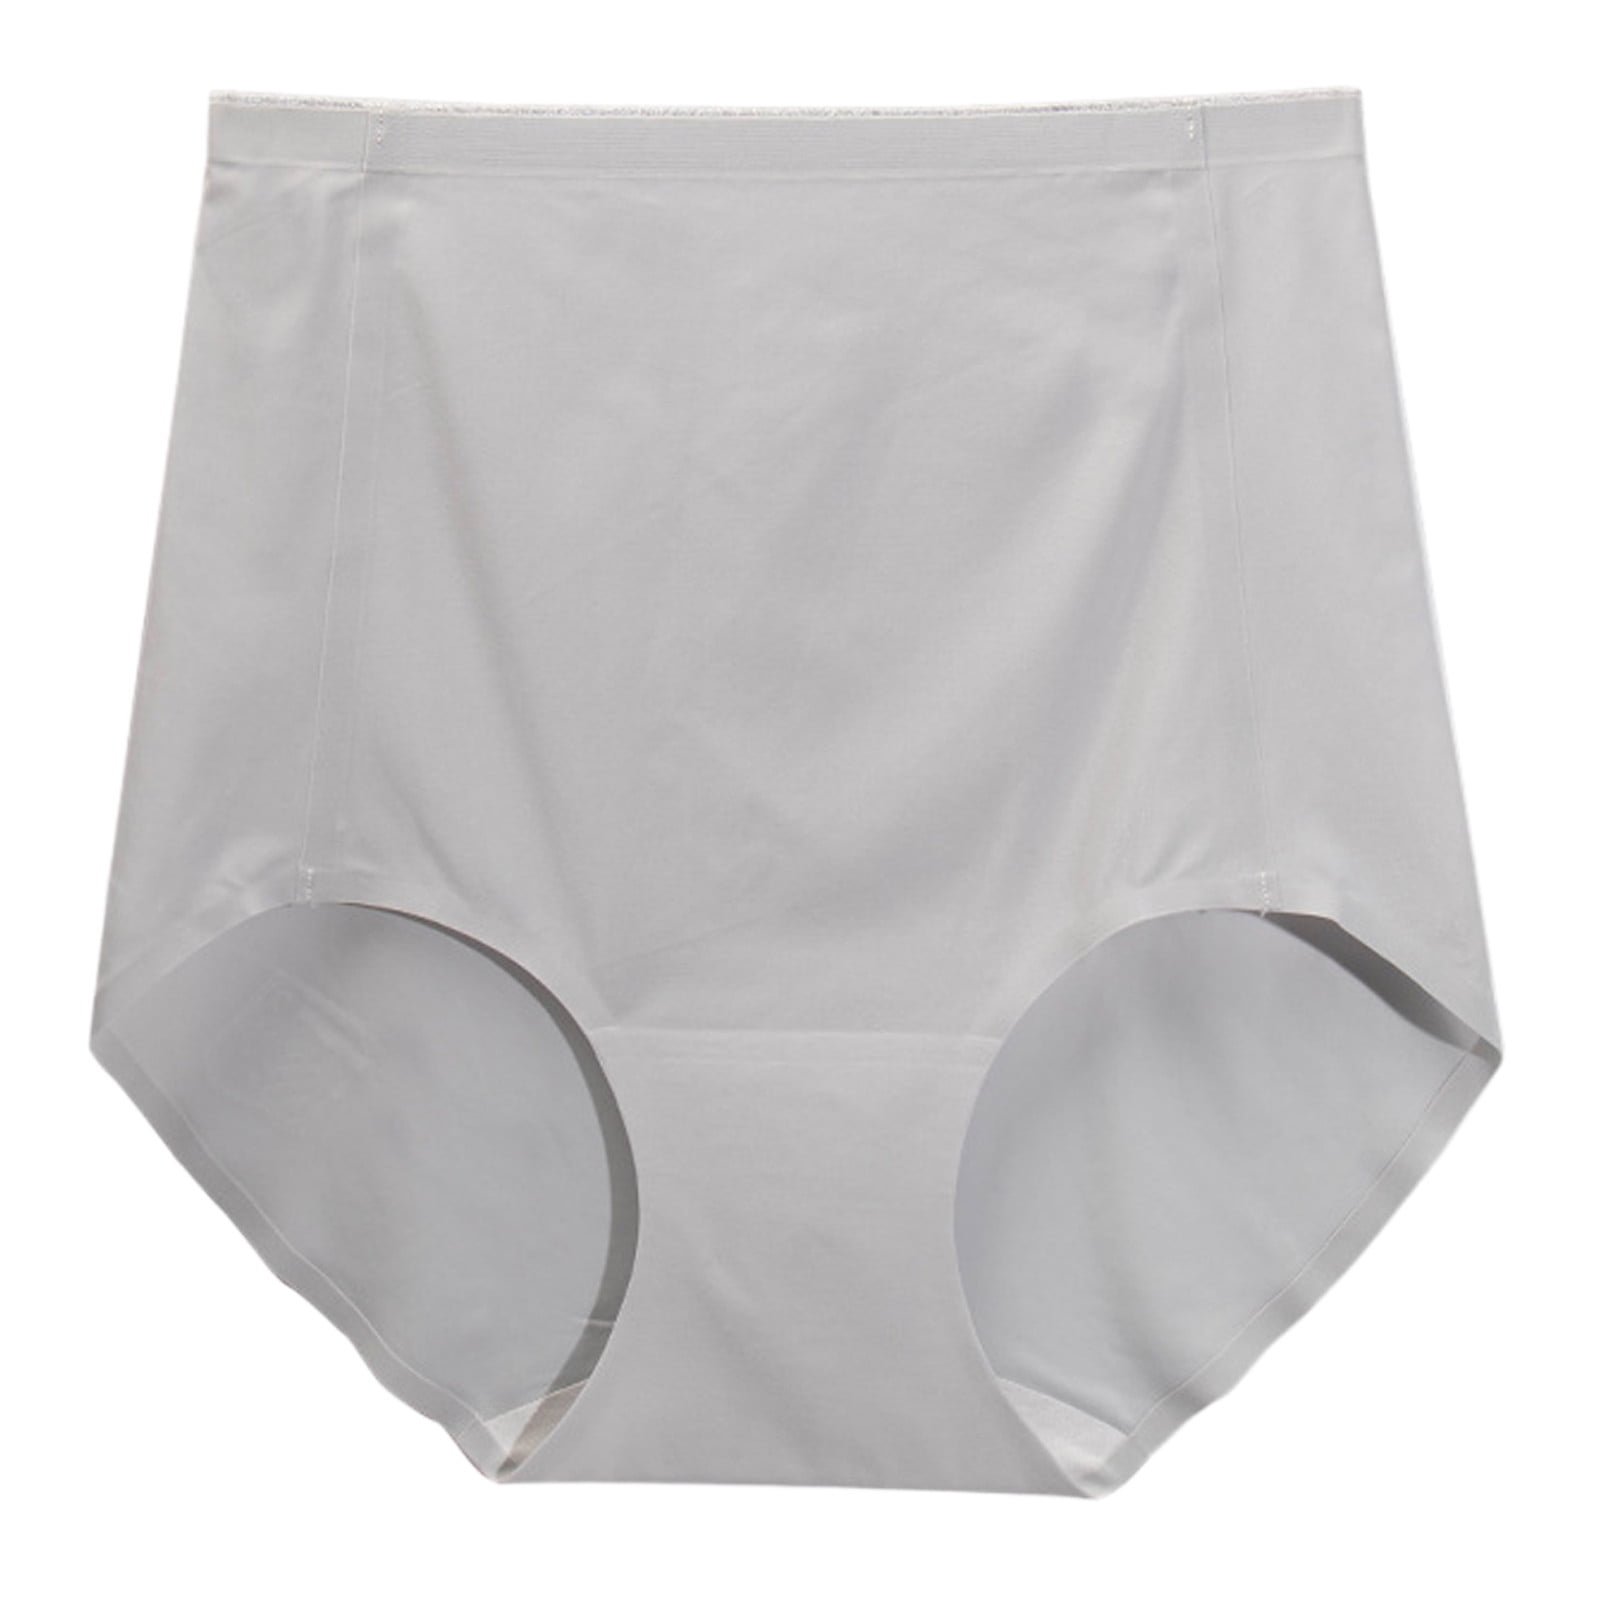 XZHGS Graphic Prints Winter Thong underpants Panties underwear